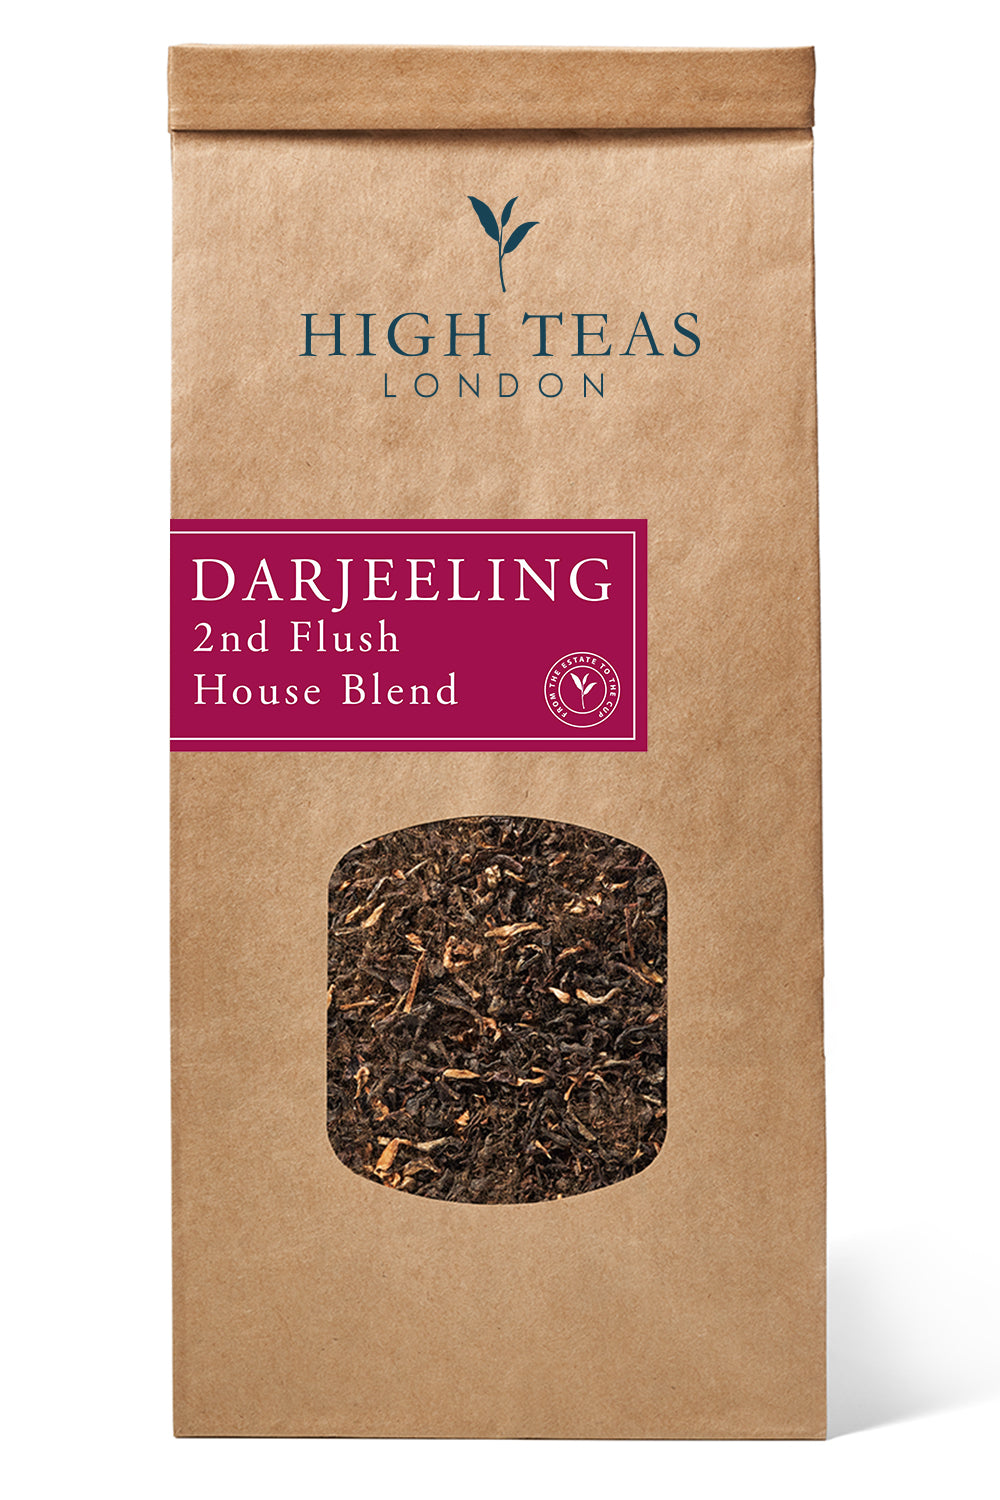 Darjeeling Premium 2nd Flush House Blend-250g-Loose Leaf Tea-High Teas